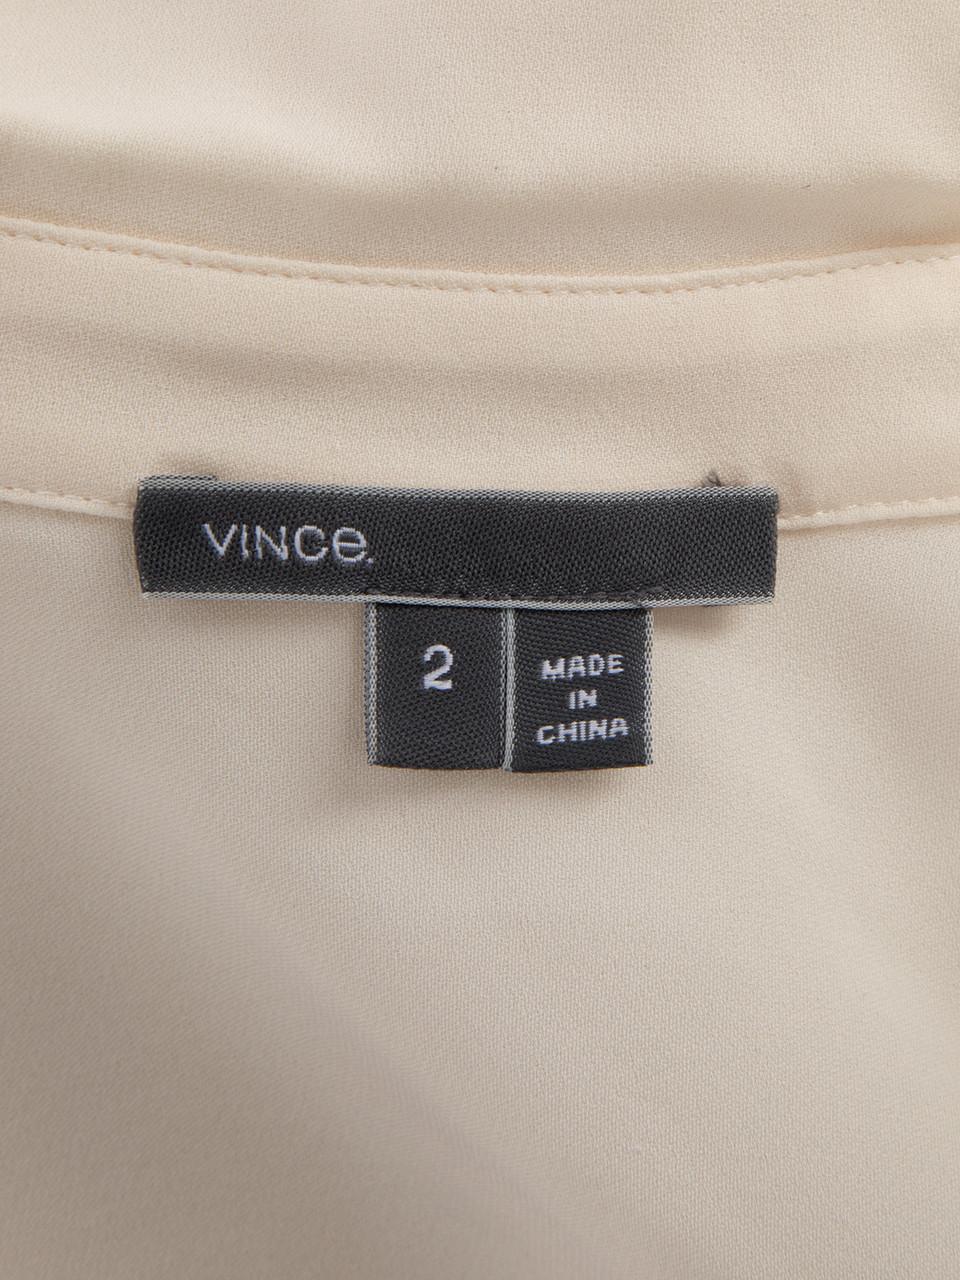 Vince Cream Button Up Drawstring Jumpsuit Size XS For Sale 2